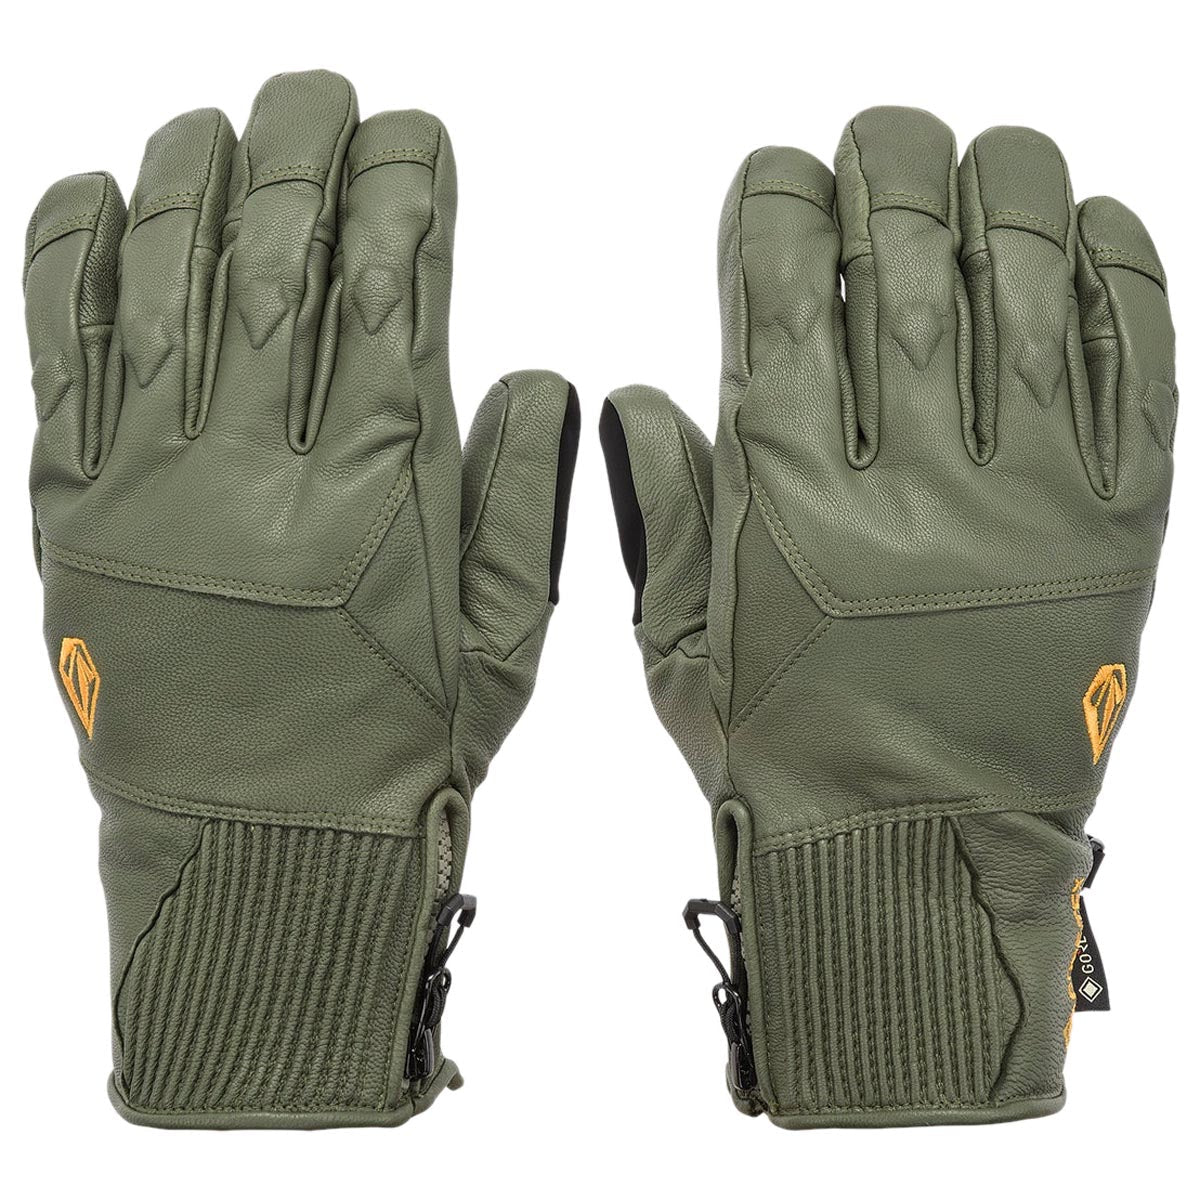 Volcom Service Gore-tex Snowboard Gloves - Military image 1